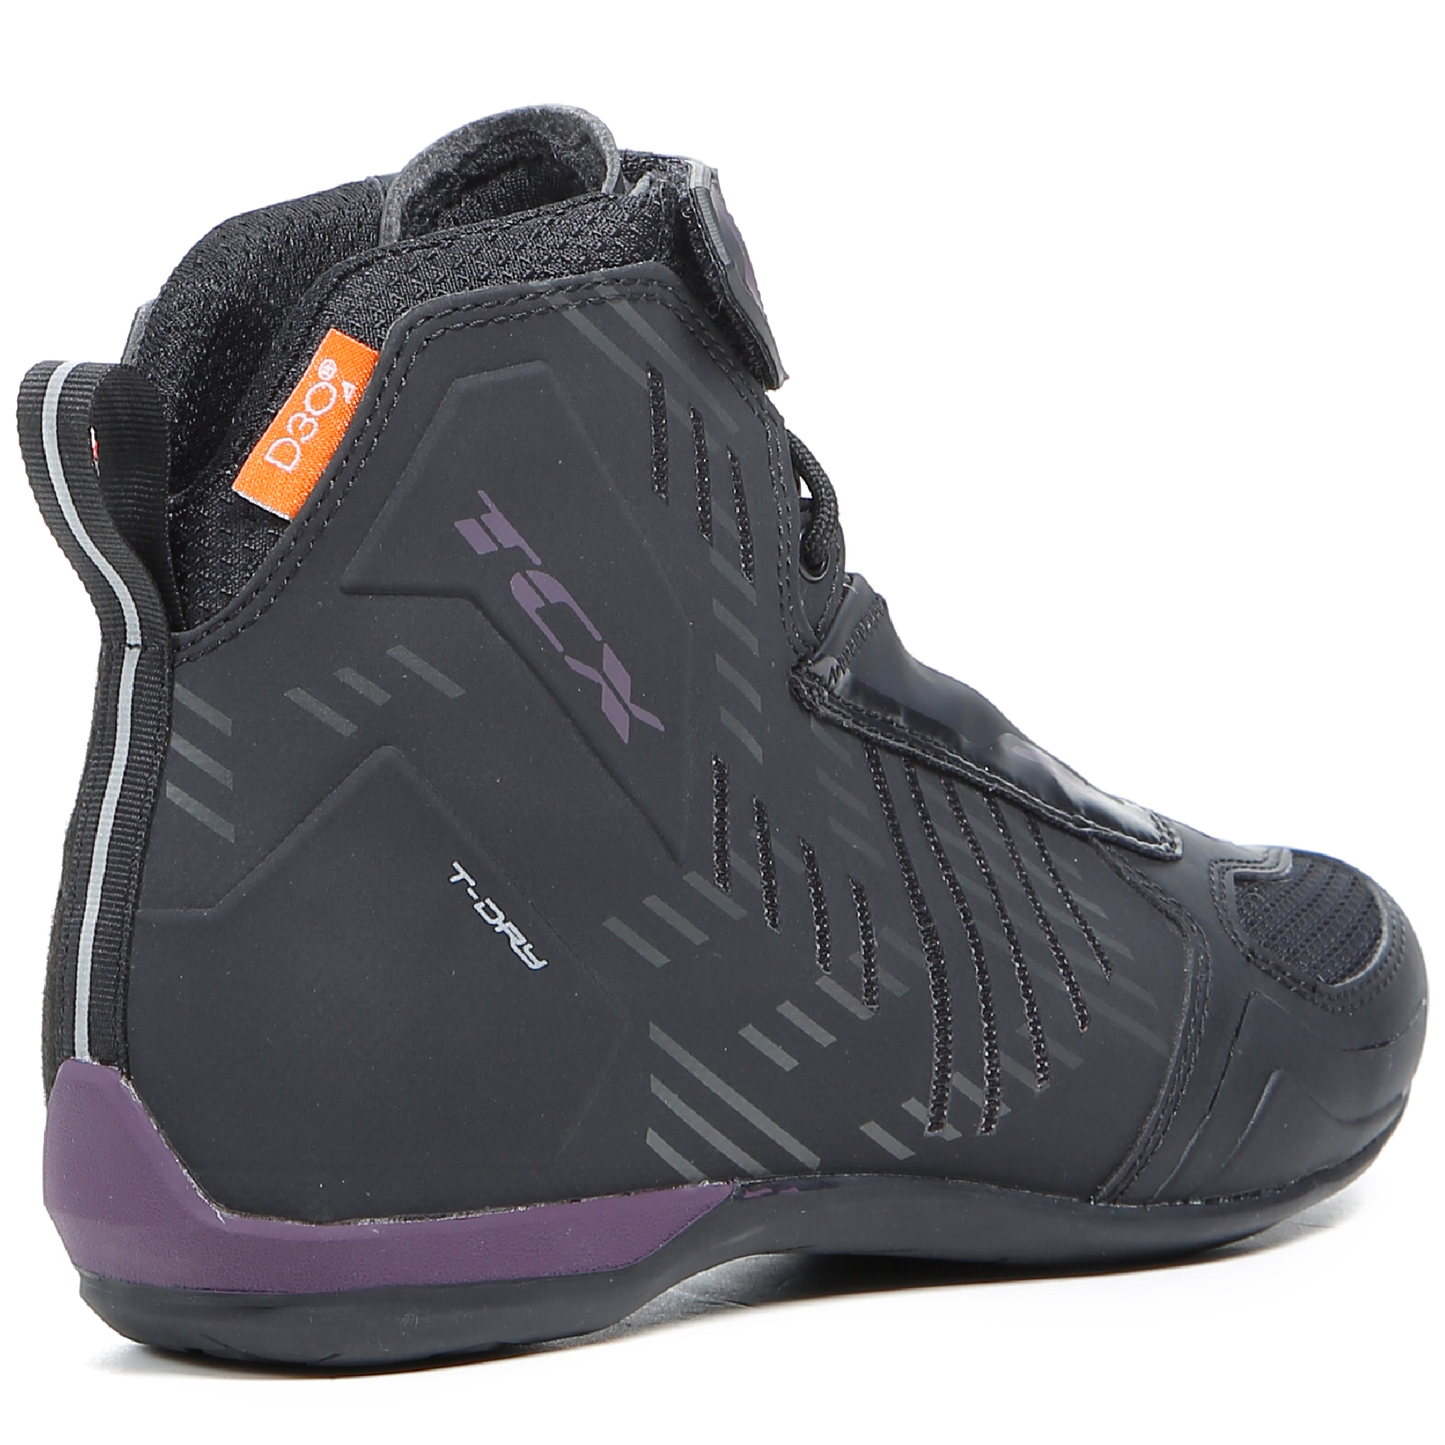 TCX R04d Lady Waterproof Boots - Black